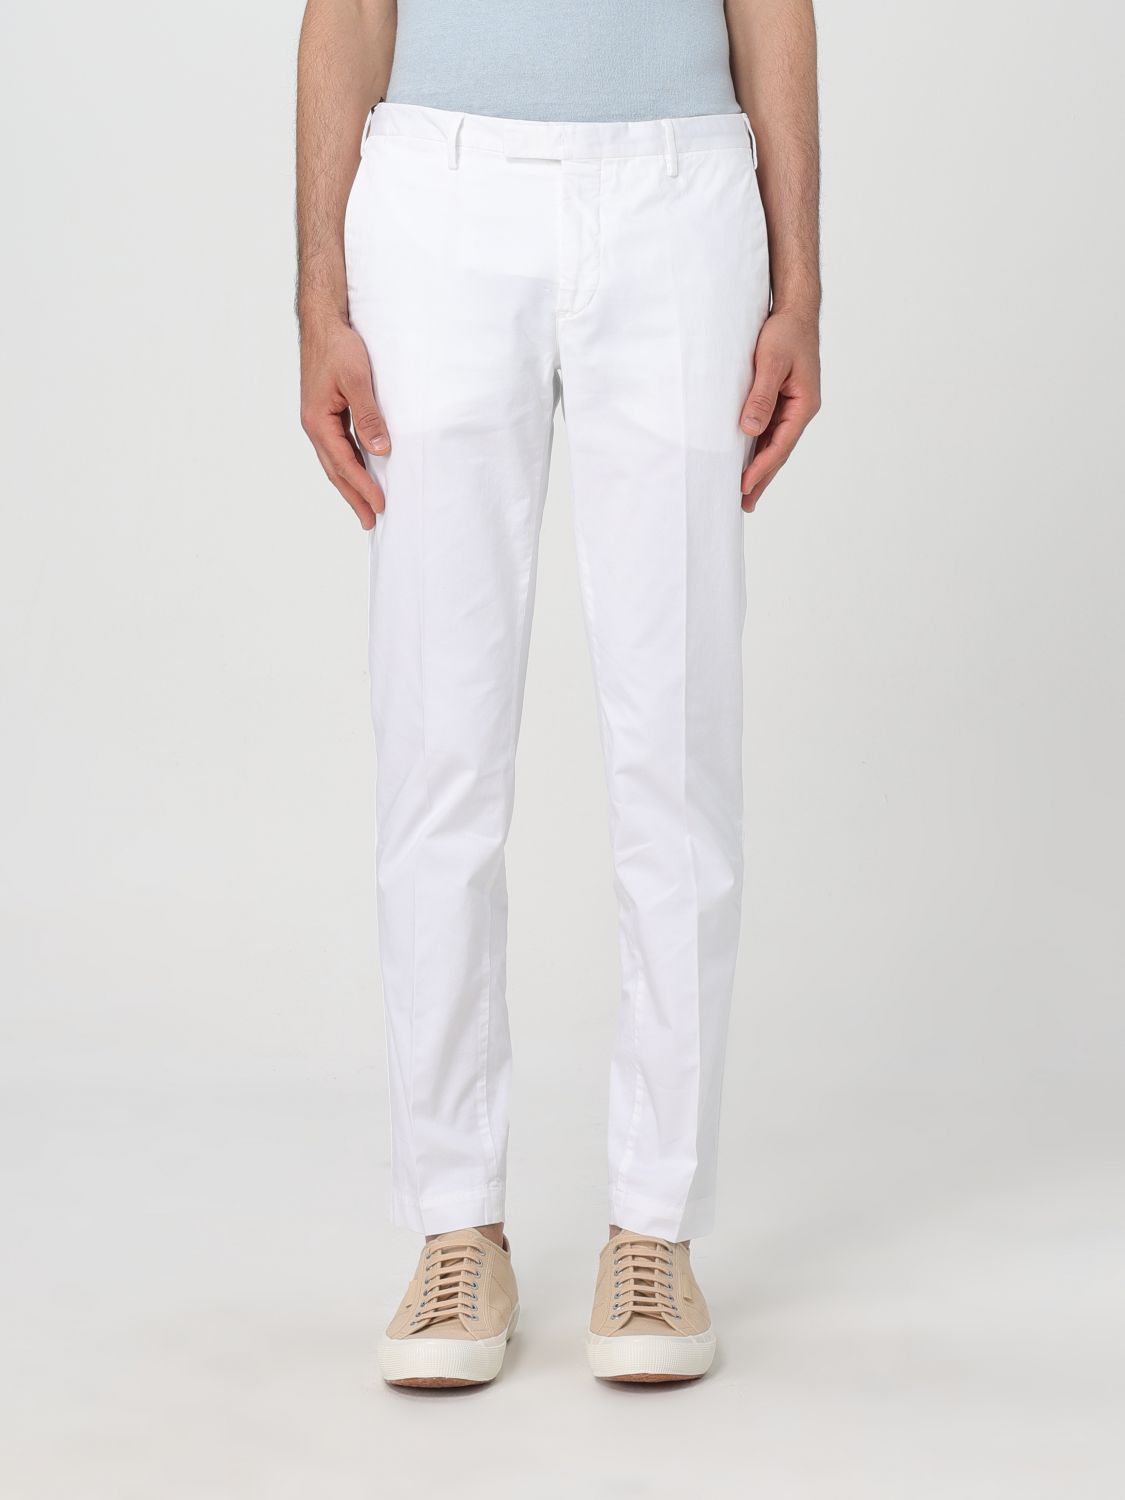 Men's| Buy White Cotton Elastic Churidar Pajama Online In India Pyjama  Wiast 32 Pyjama Length 40